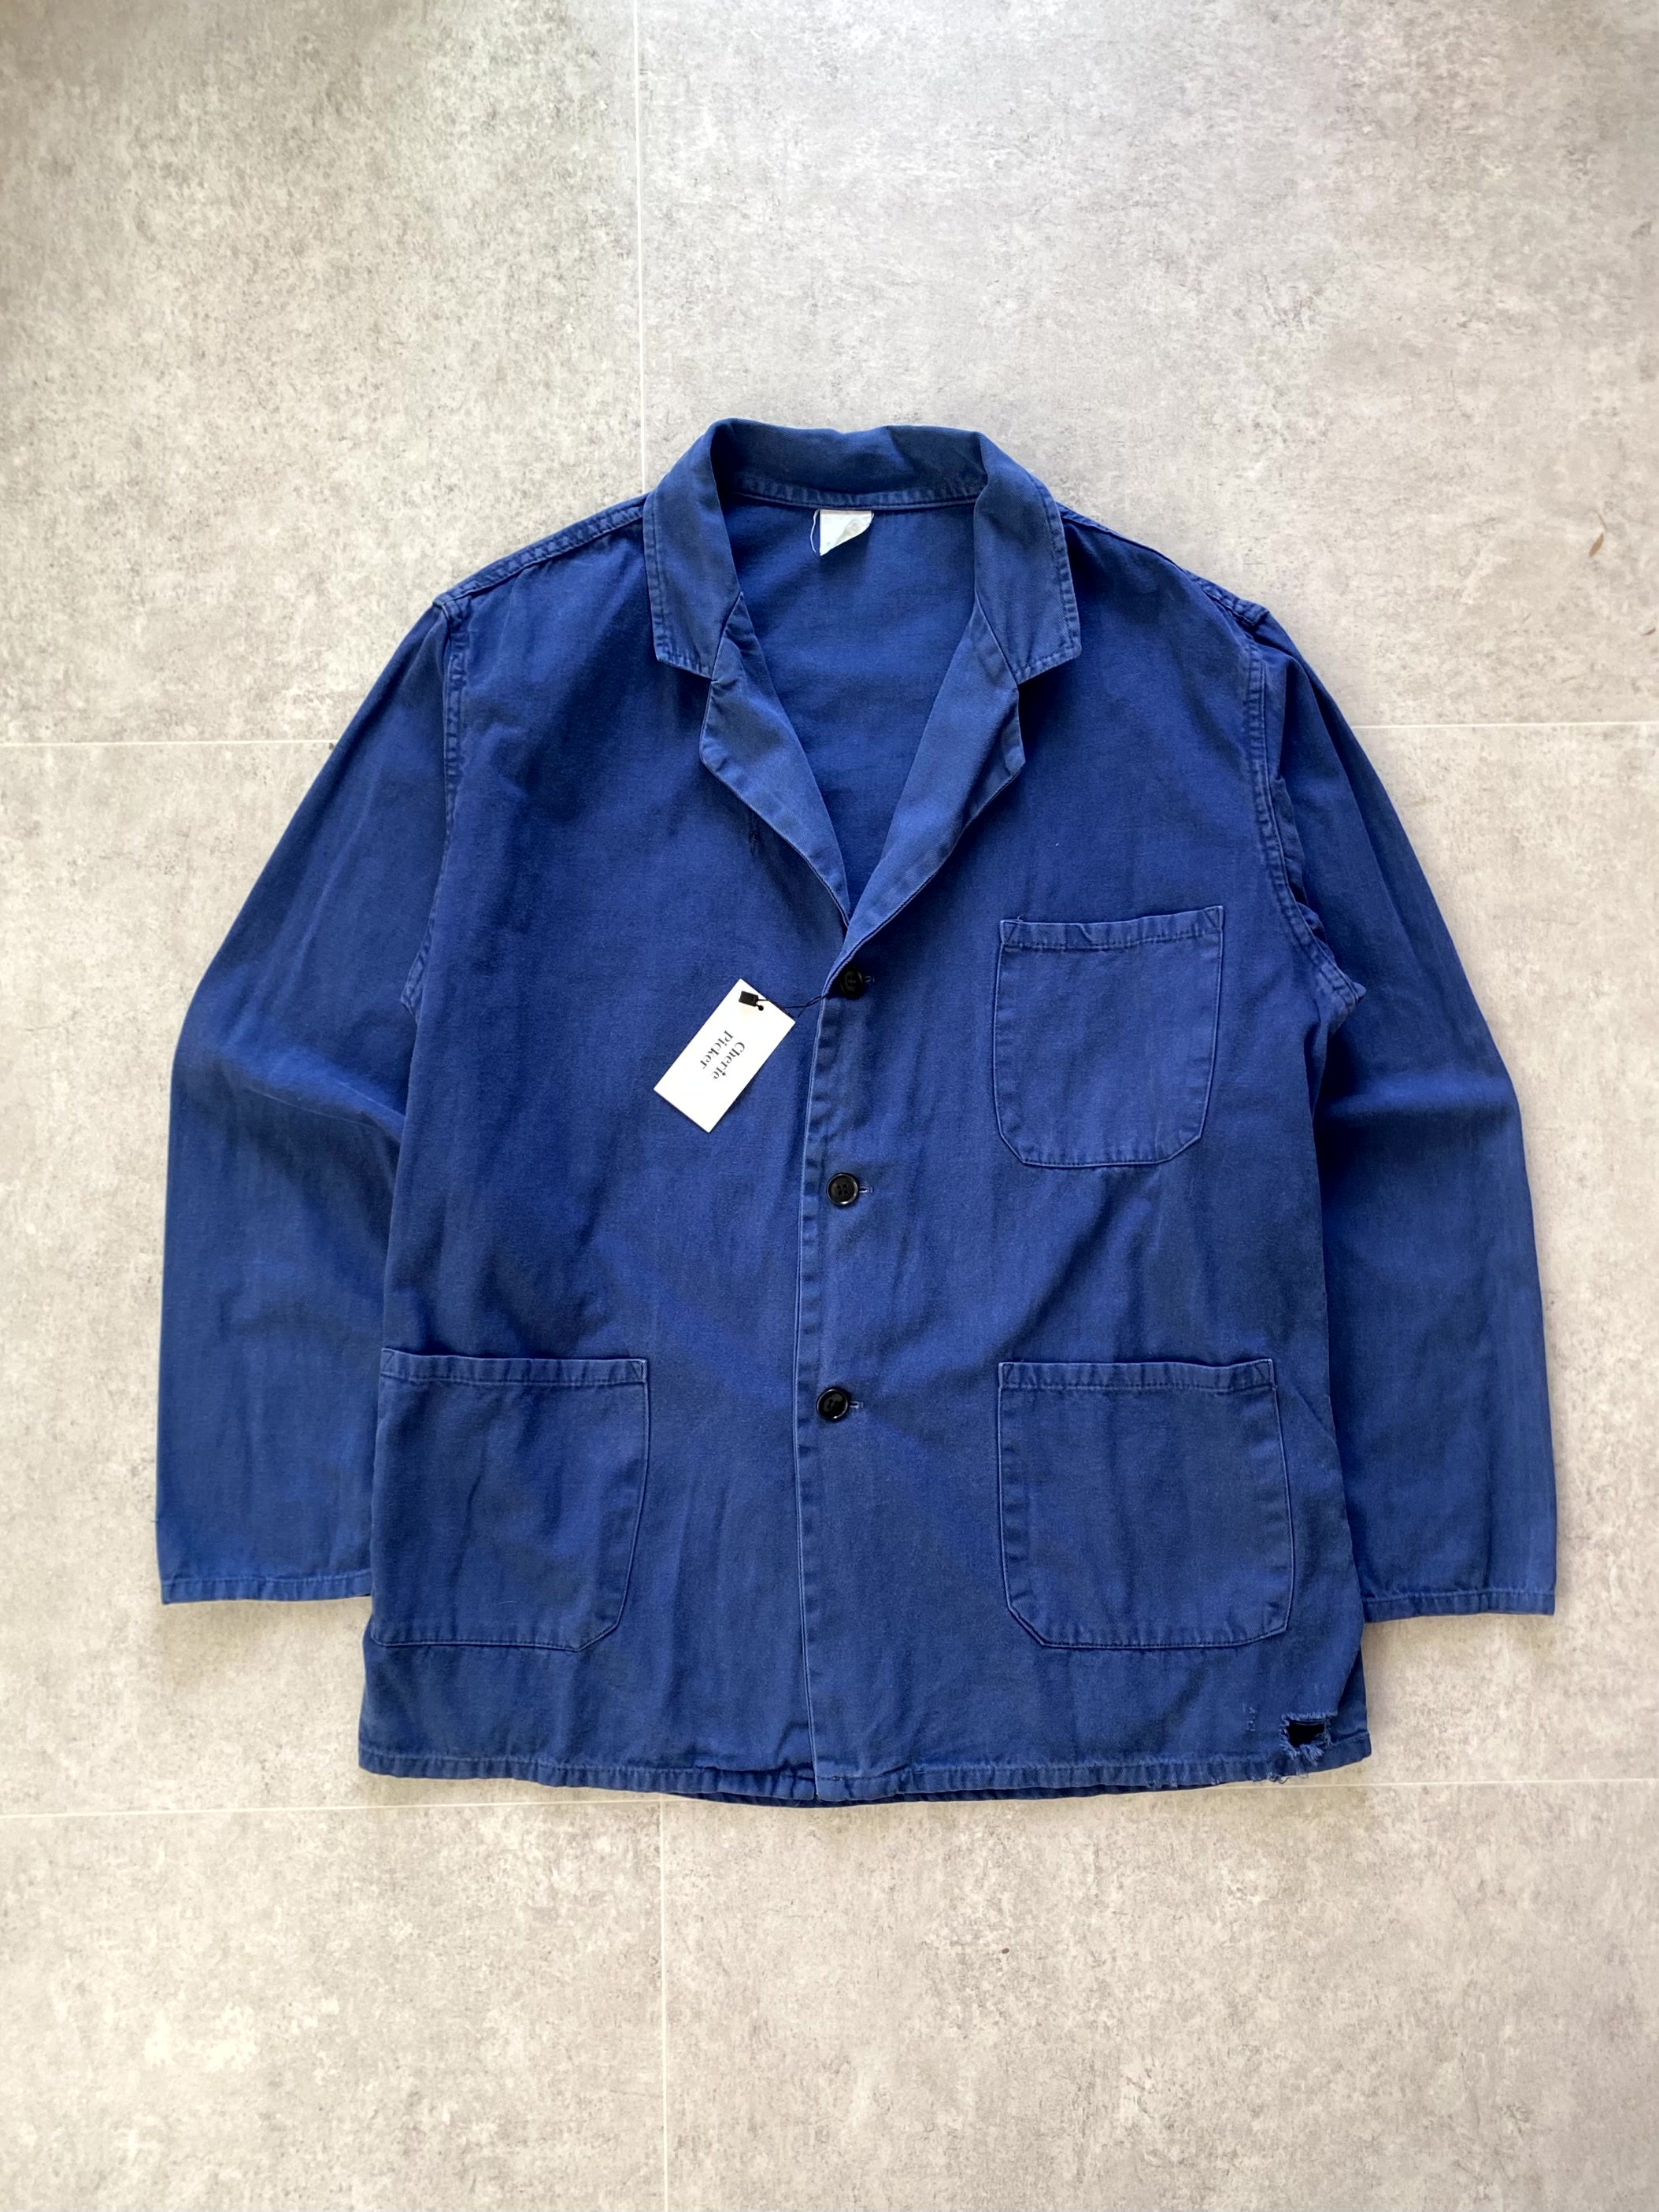 Vintage French Work Jacket 100~105 Size #9 - 체리피커